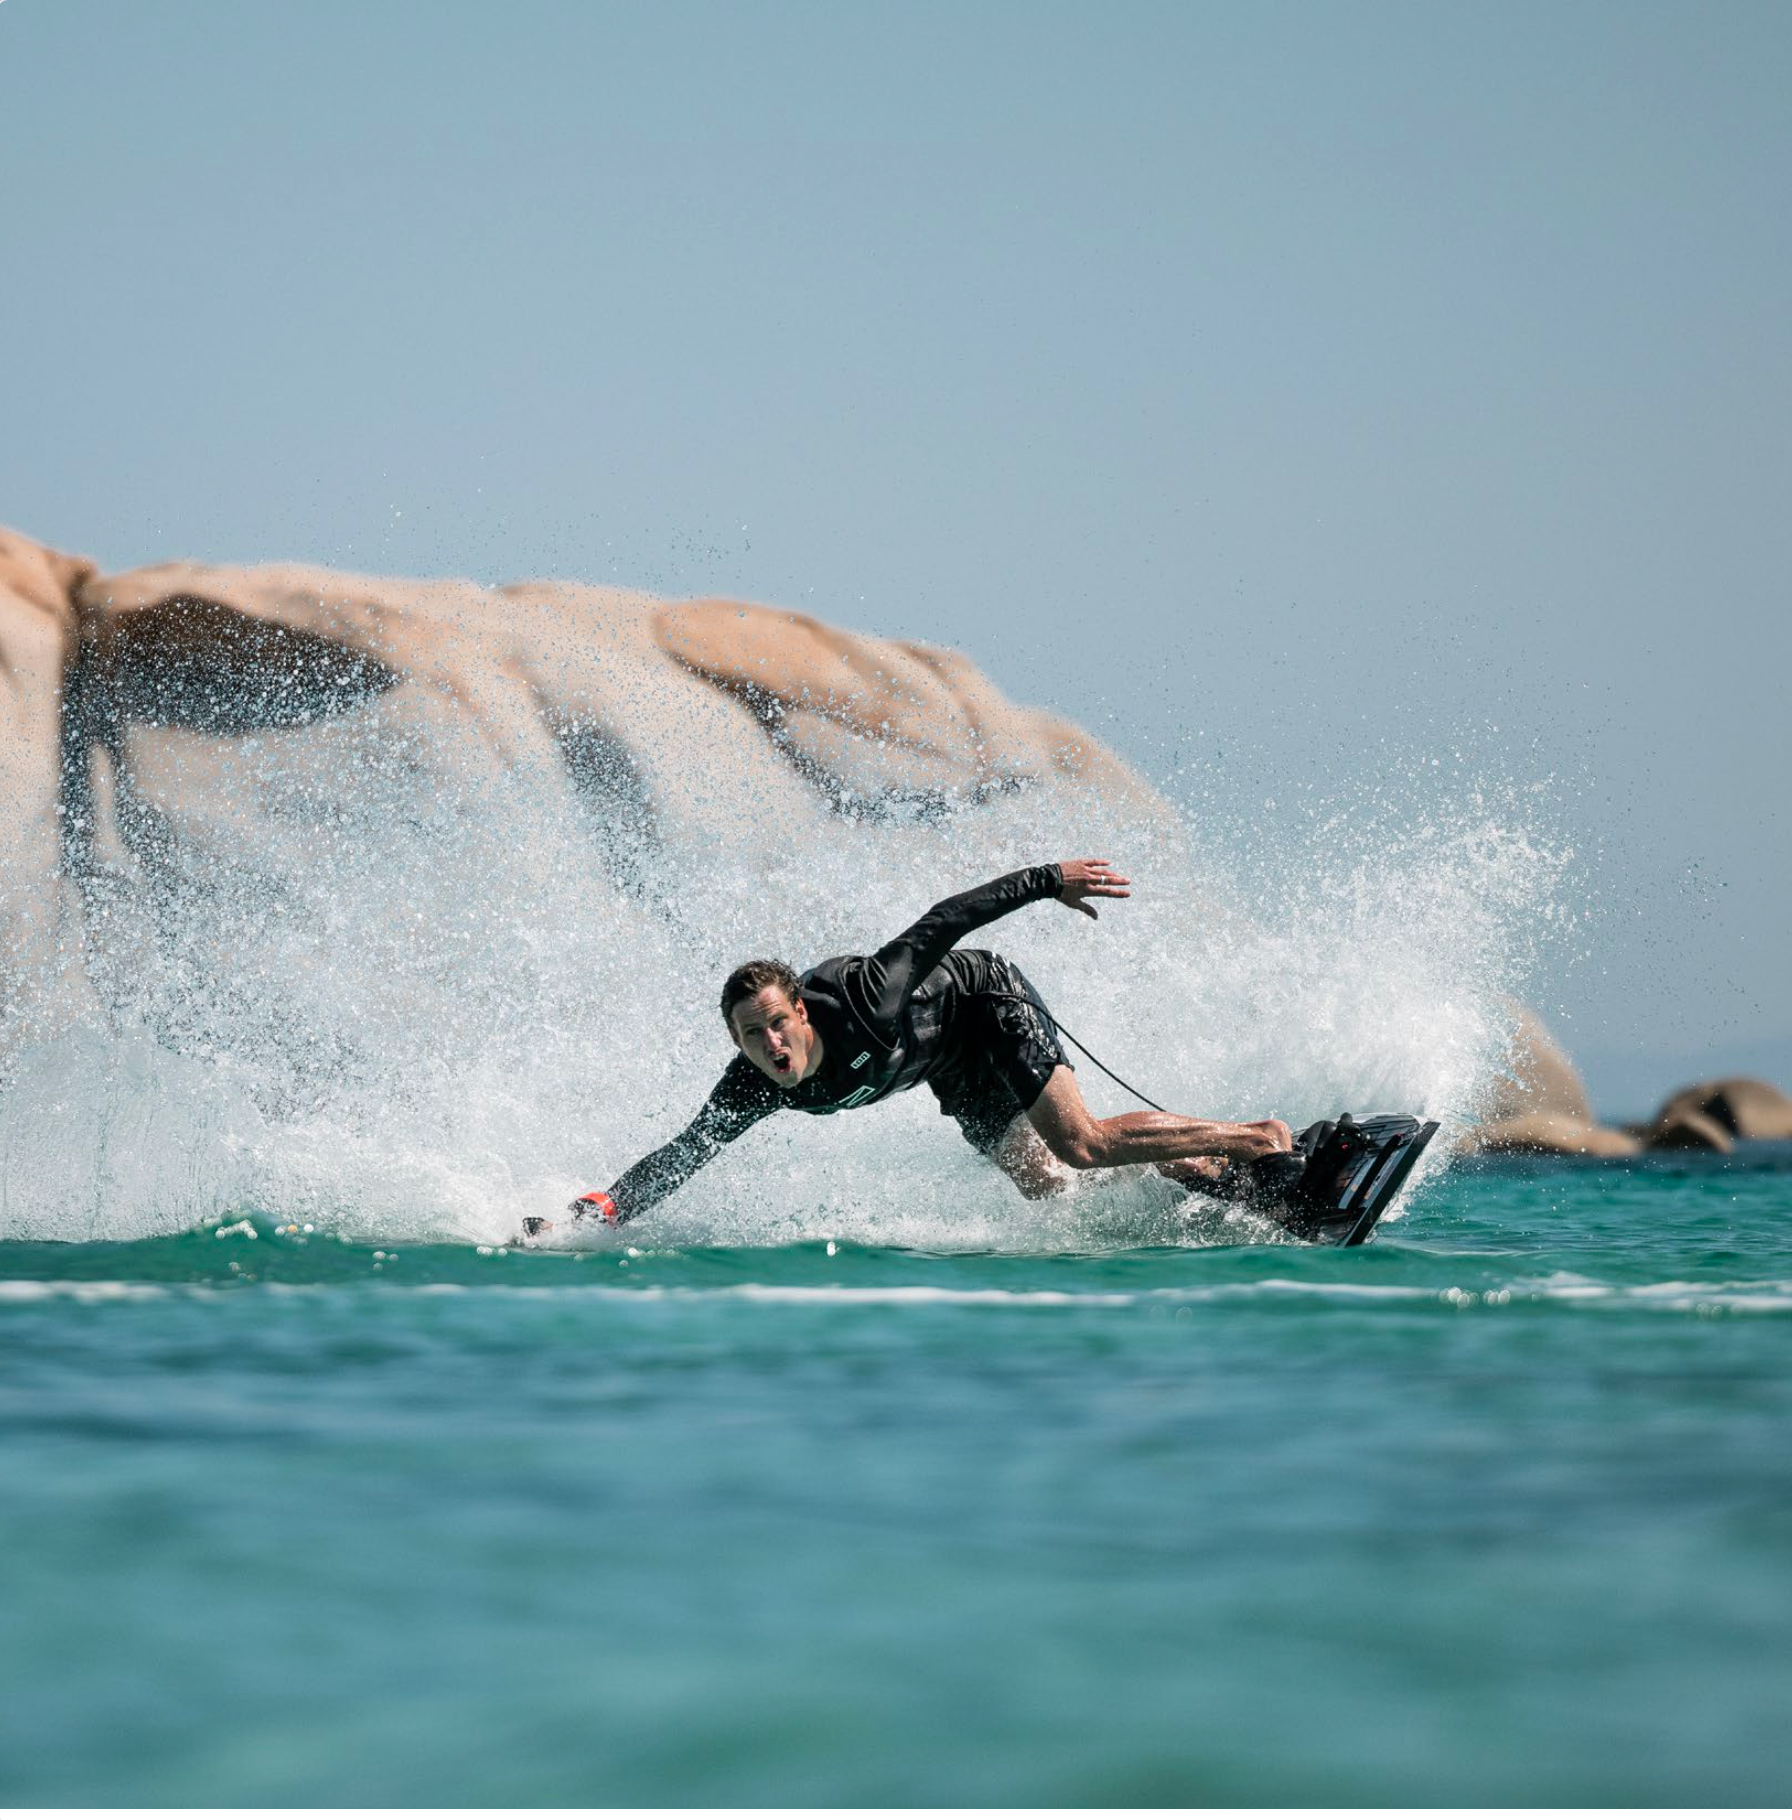 e-boarders-eboarders-awake-brabus-shadow-ejetboard-ravik-vinga-fin-board-bag-kit-wall-mount-custom-battery-charger-powerkey-ravik-vinga-jetboard-efoil-standard-range-extended-range-watersports-water-sports-electric-wakeboard-surfboard-ejetboard-efoil-ewakeboard-epaddleboard-eboard-boardbag-man-surfing